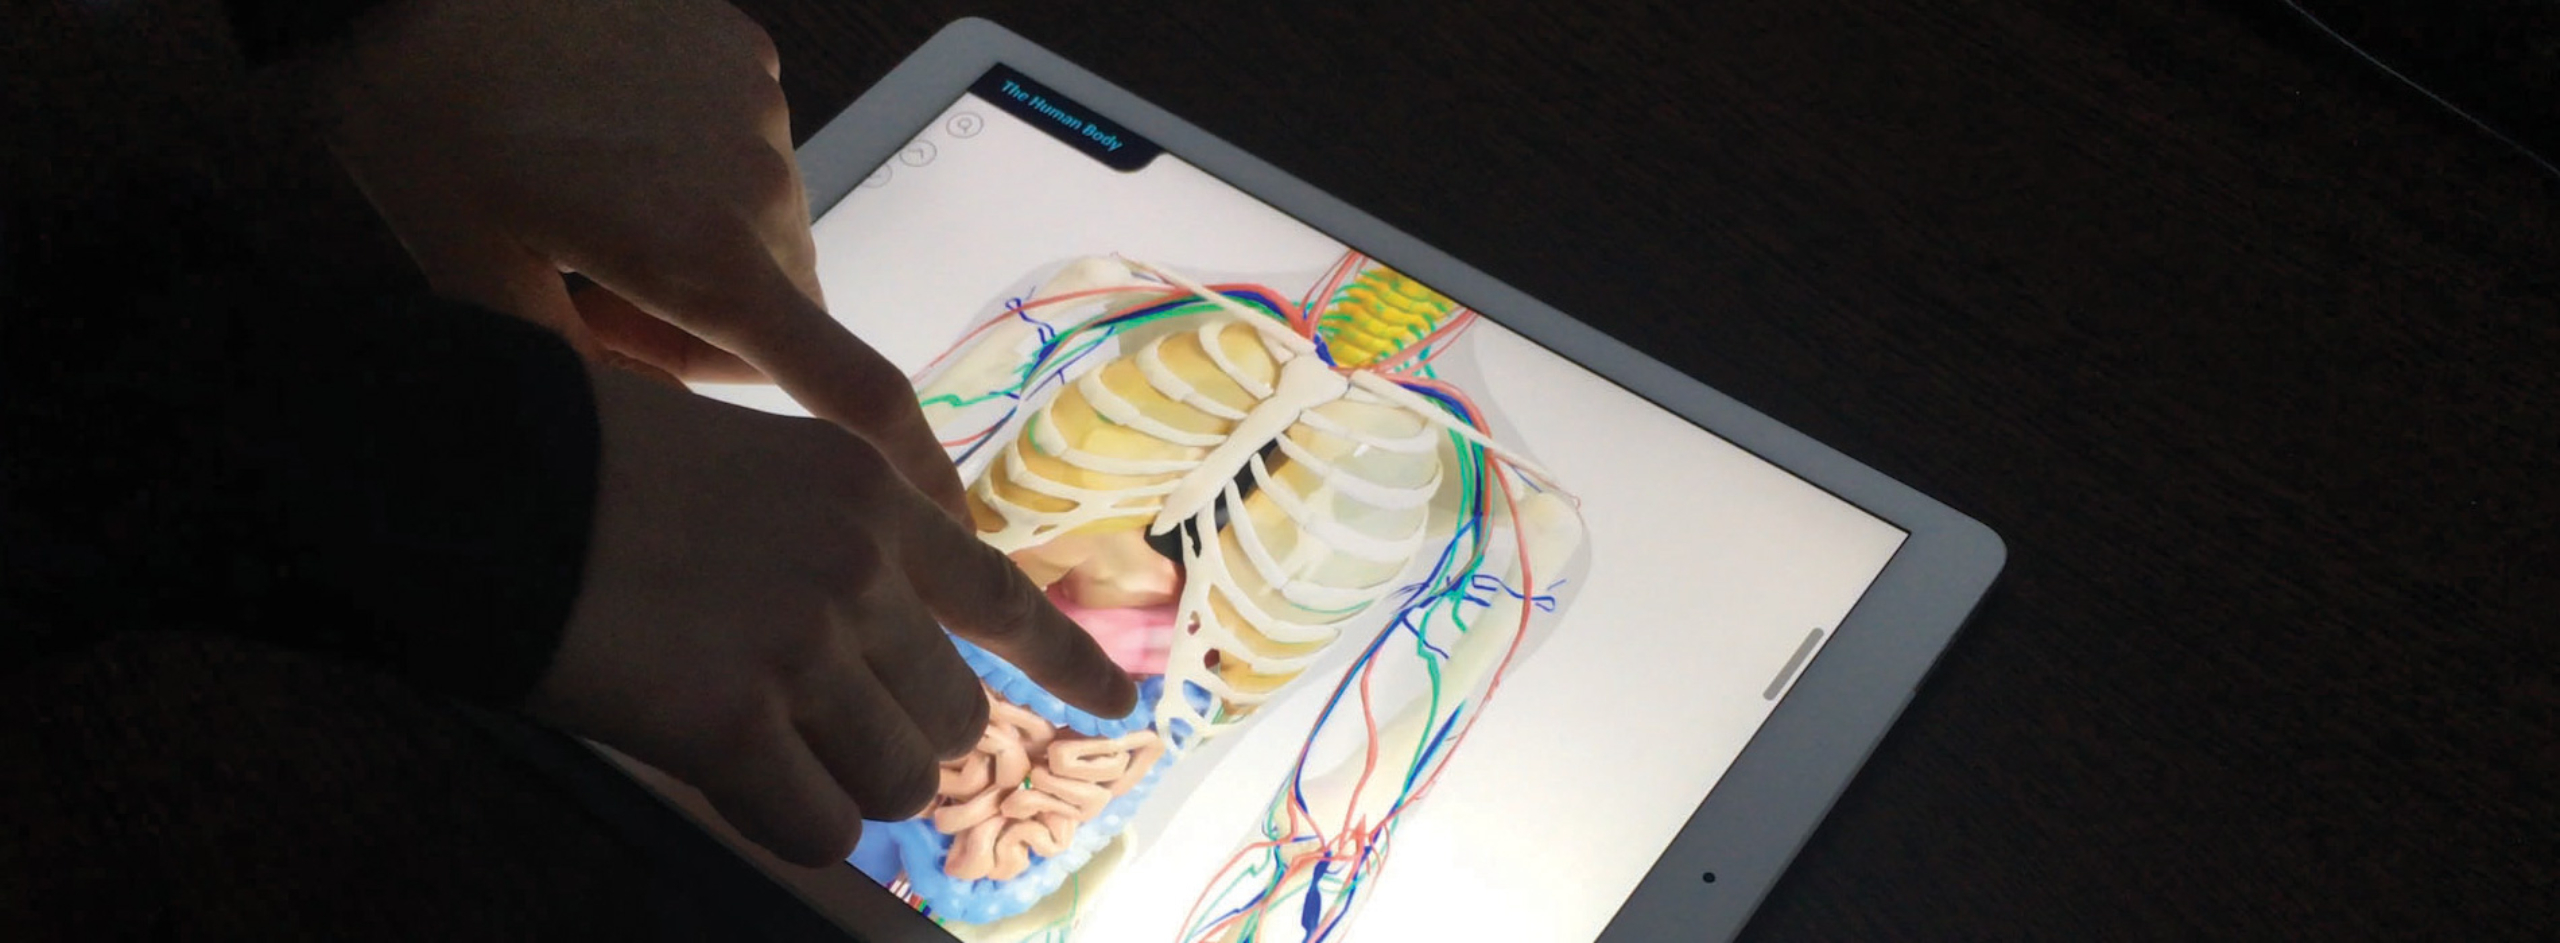 Interactive human body app designed by Random42